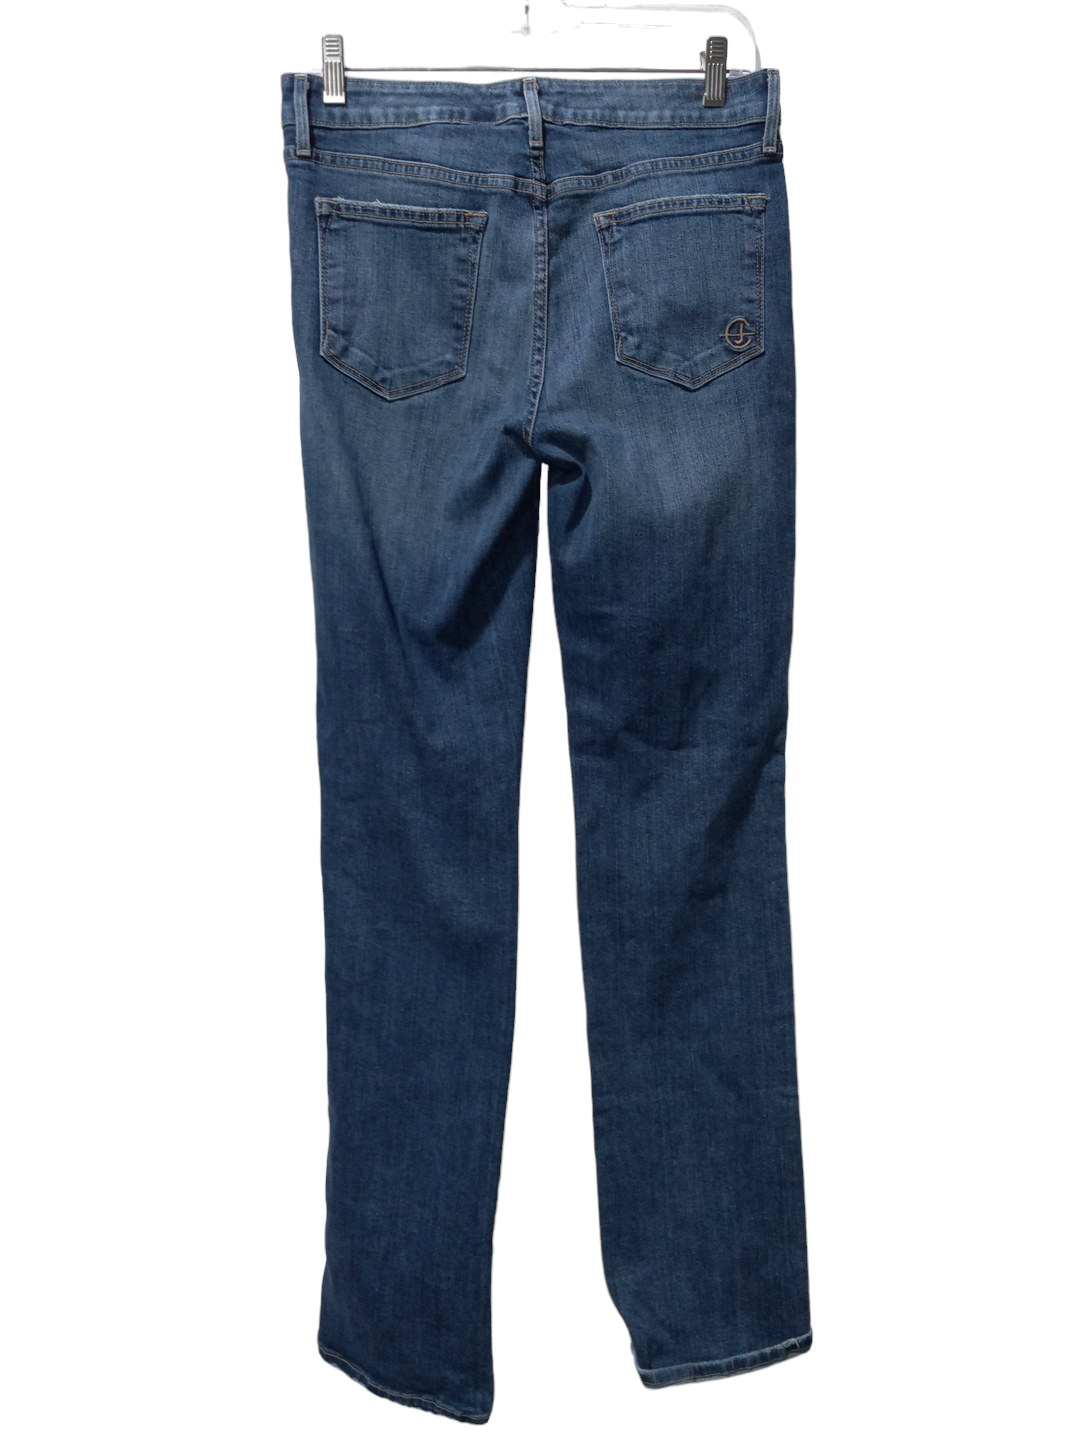 Blue Denim Jeans Straight Cookie Johnson, Size 9